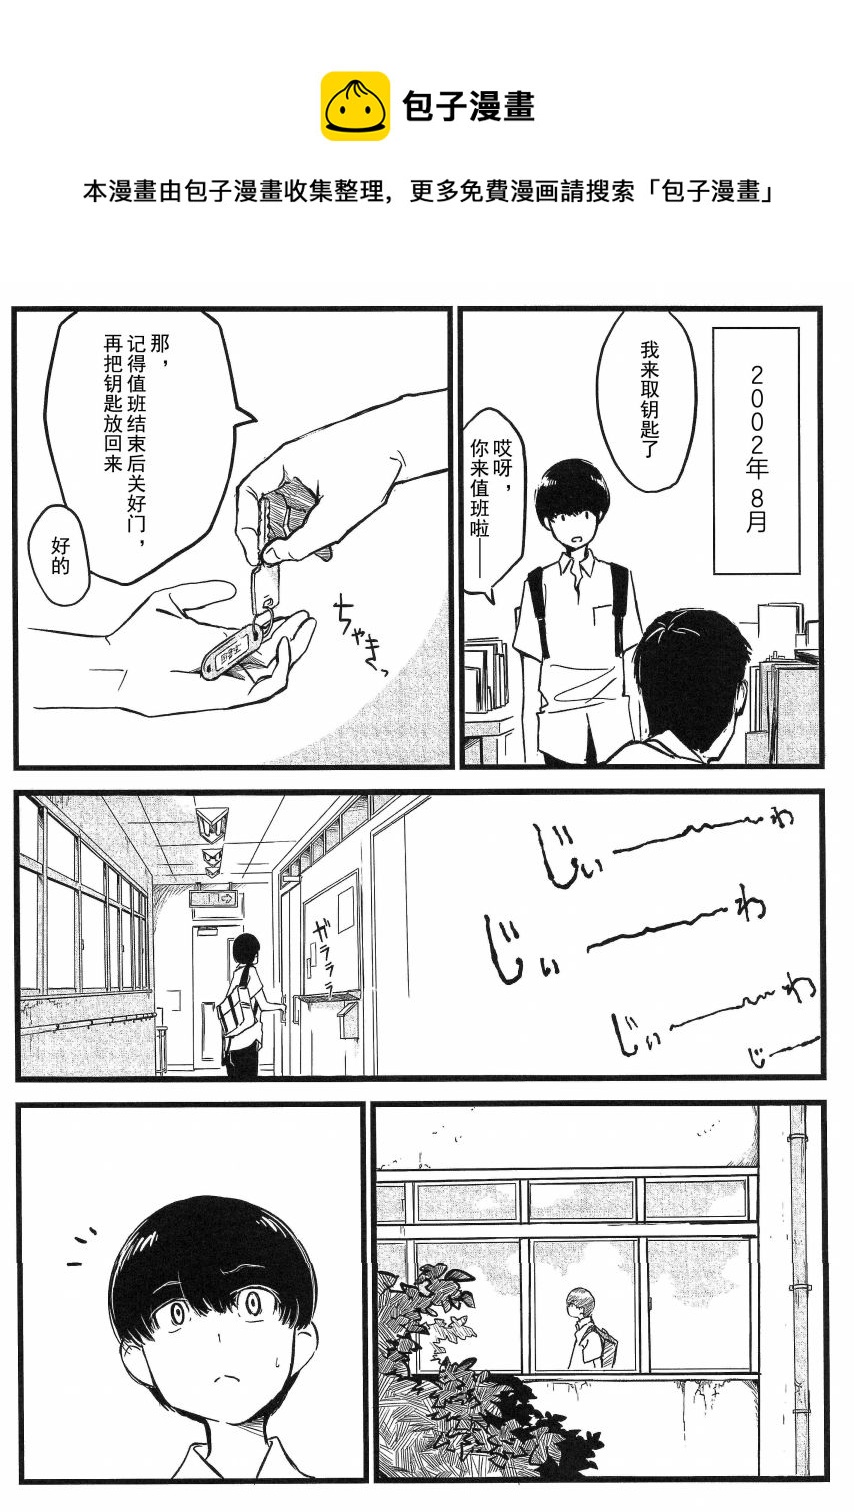 SSSS.戴拿賽諾 感謝本漫畫 - 第1話 - 1